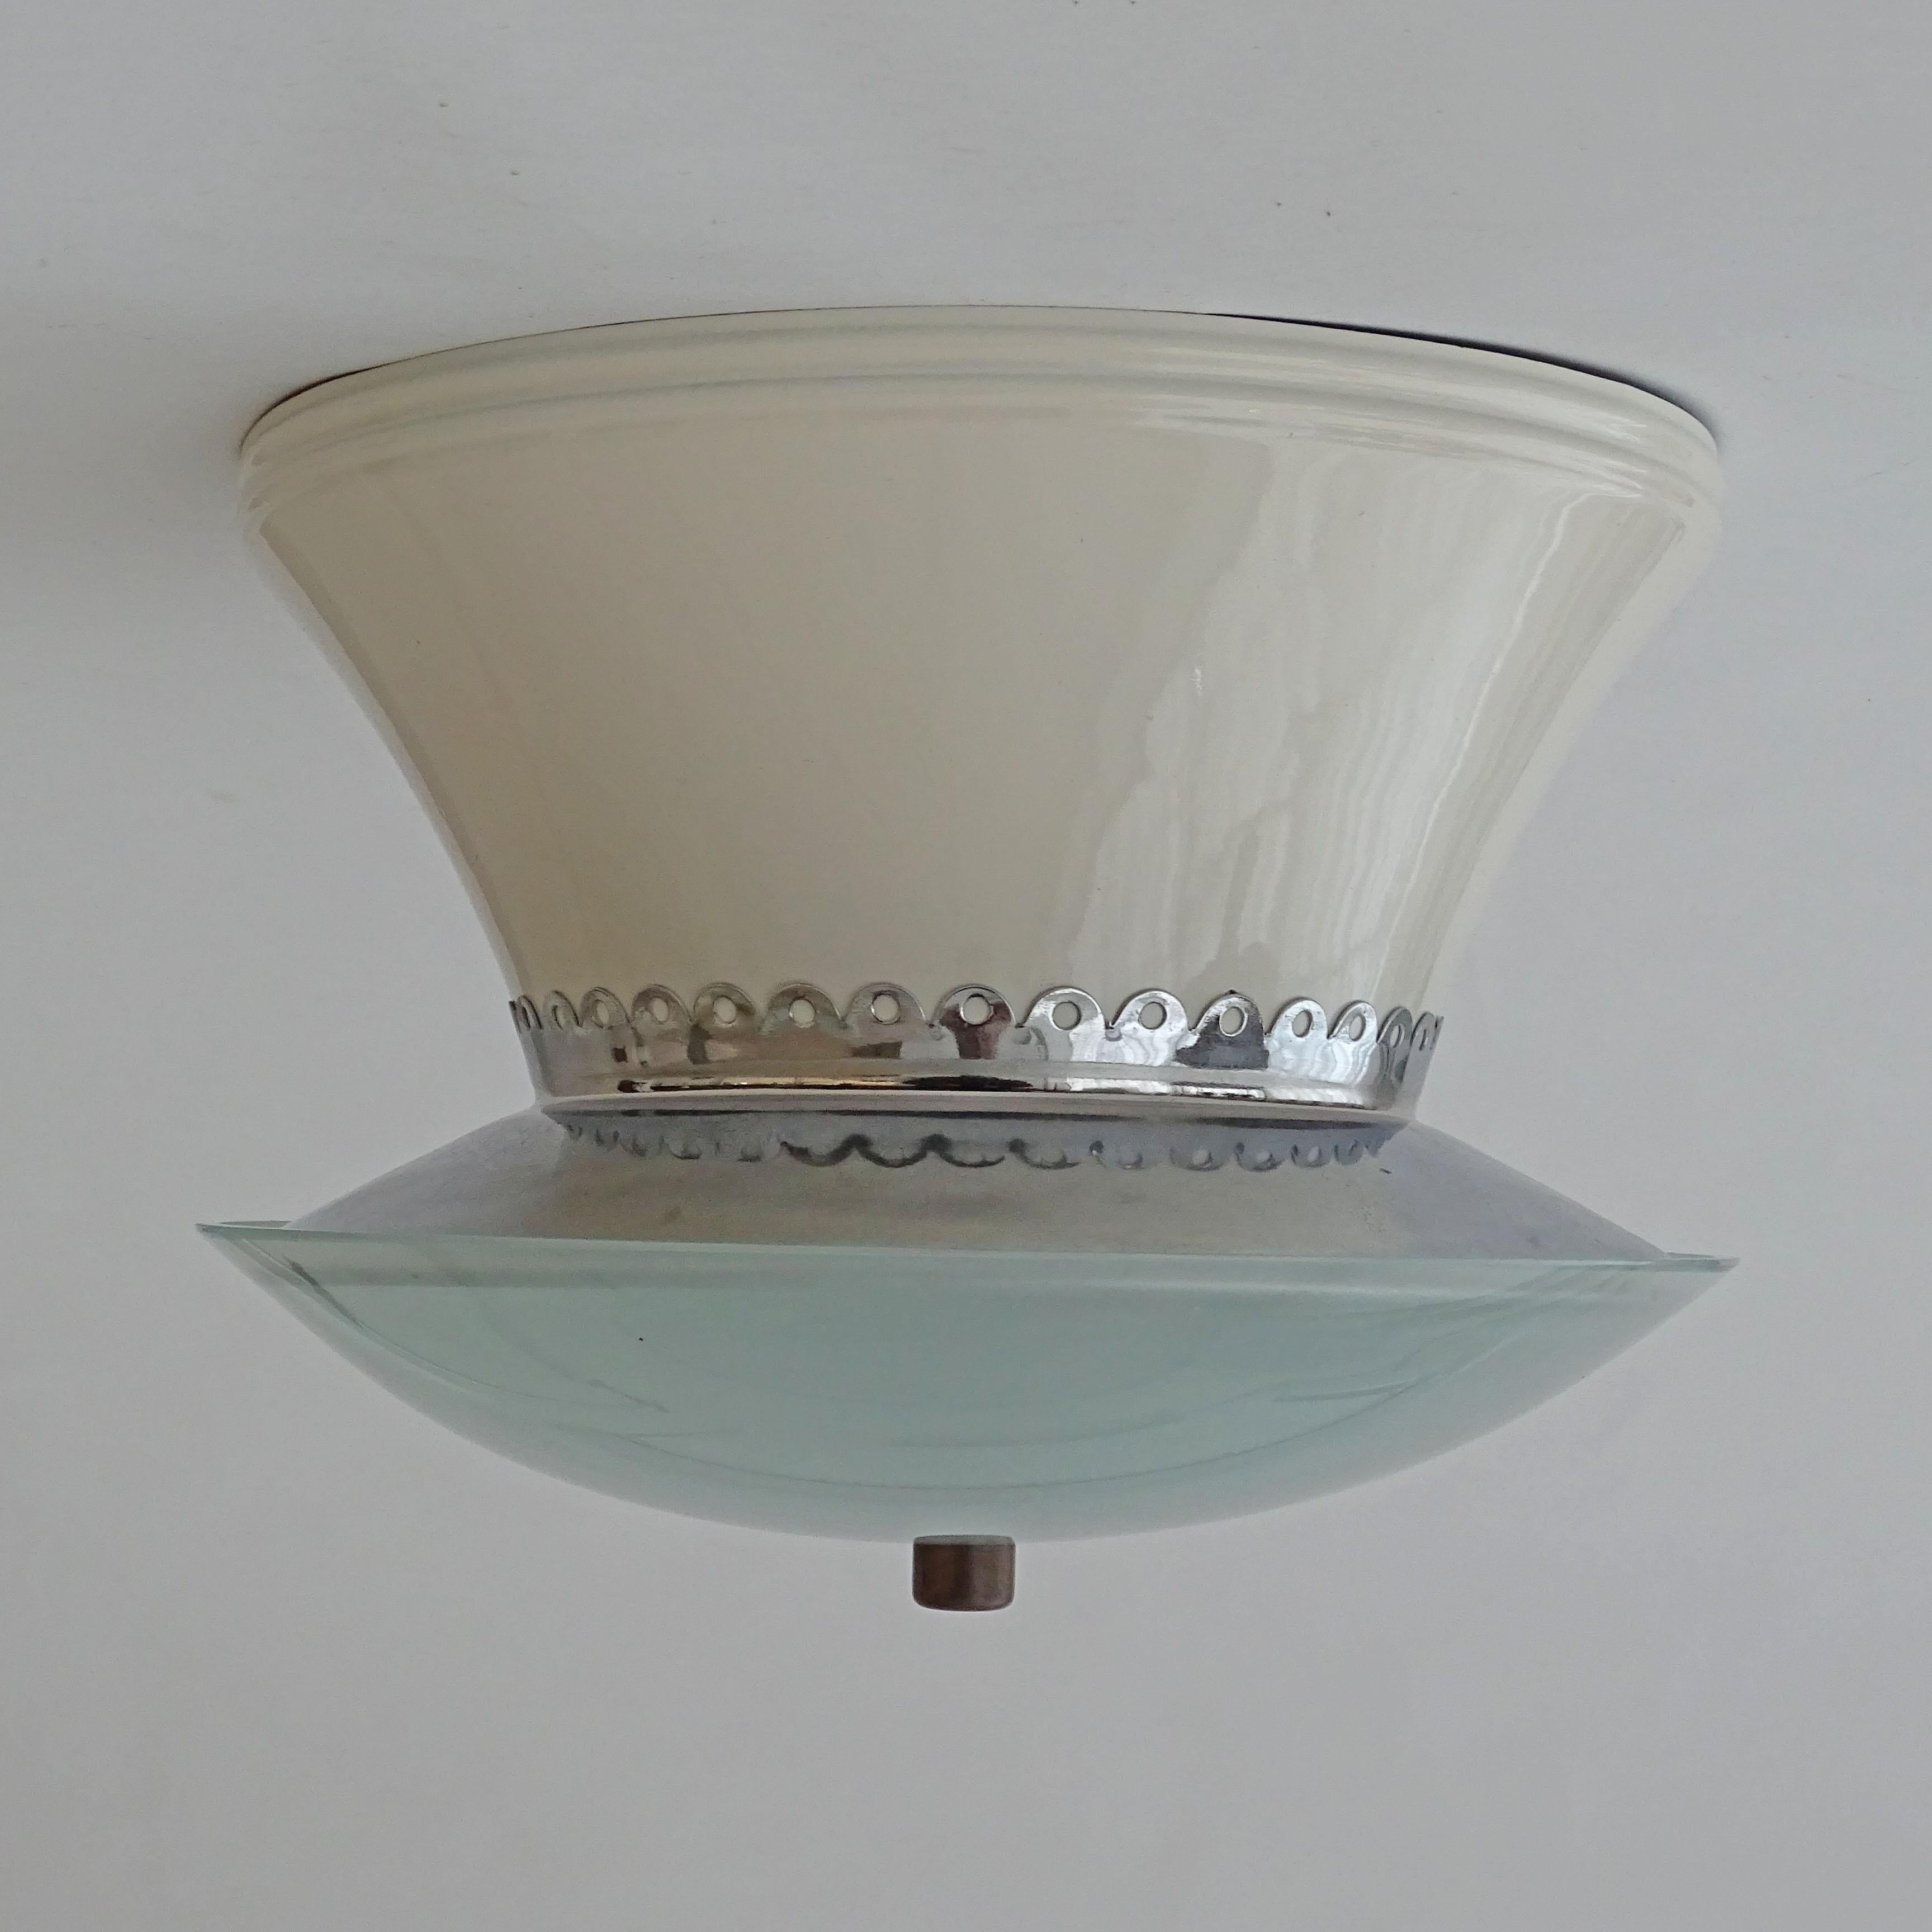 Early Stilnovo Flush Mount Ceiling Light, 
Carries three lamp bulbs.
Italy 1940s